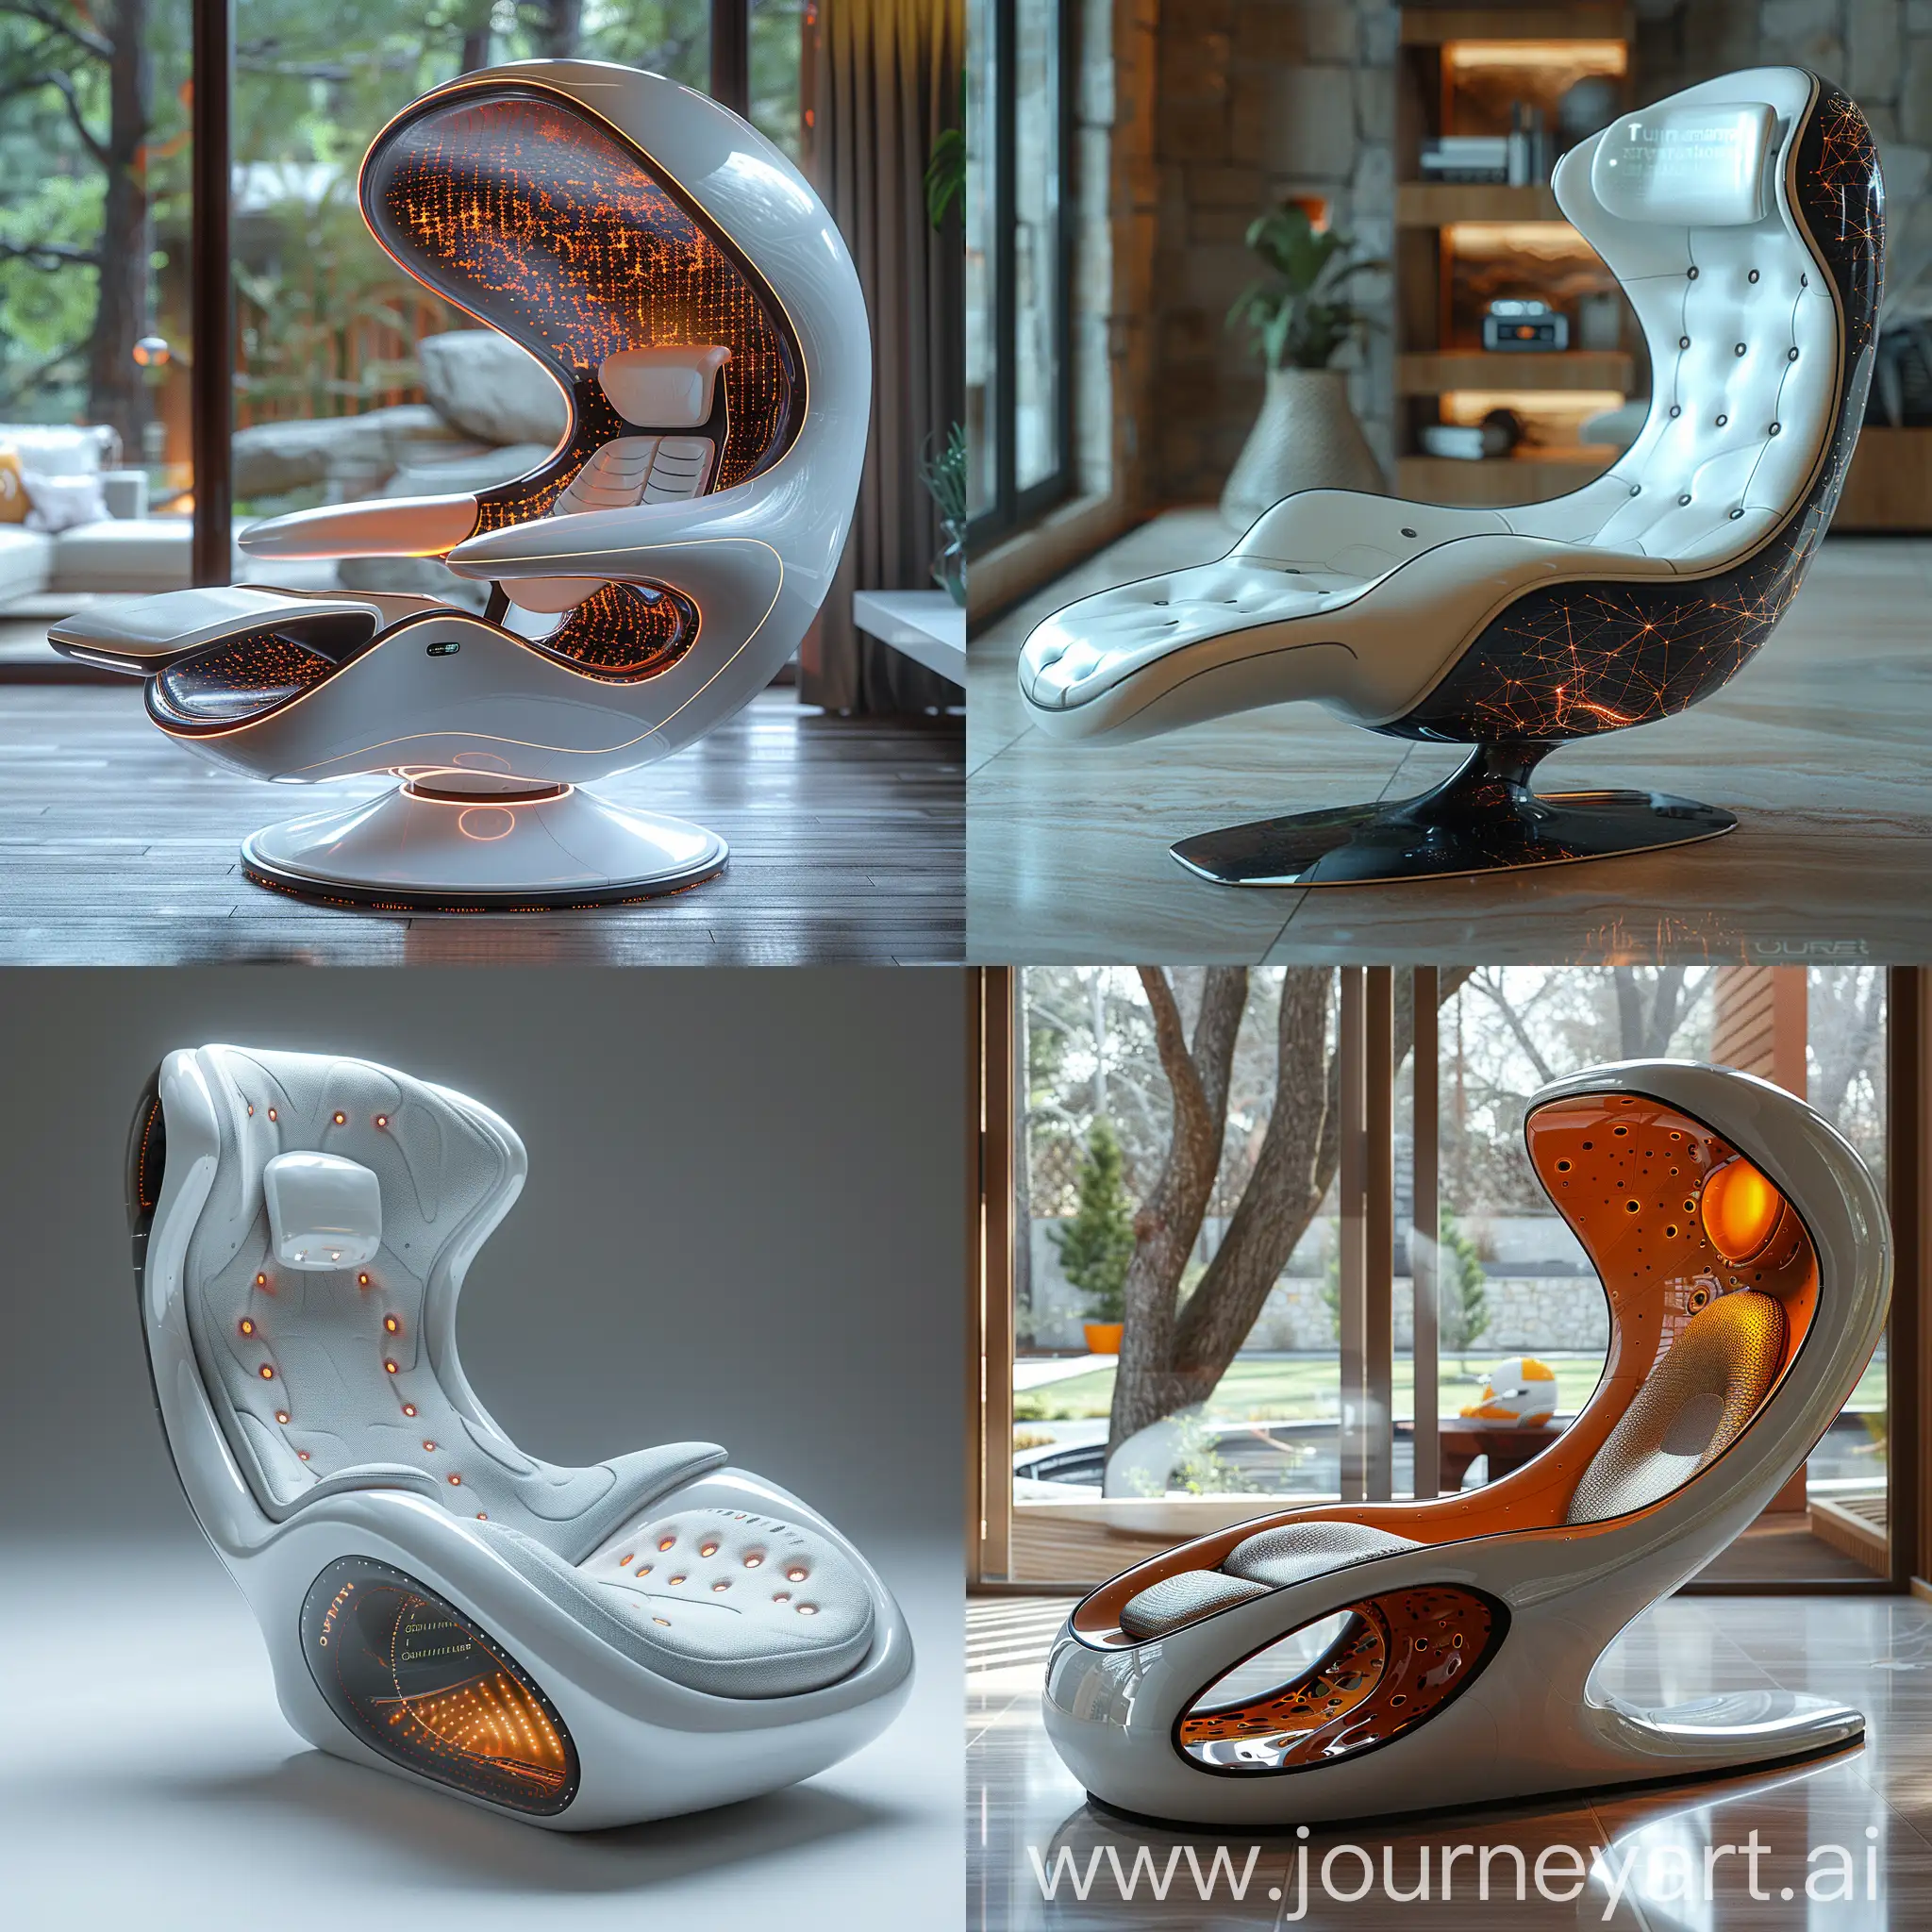 Futuristic-Biometric-Chair-with-SelfRepairing-Nanofibers-and-Interactive-Holographic-Display